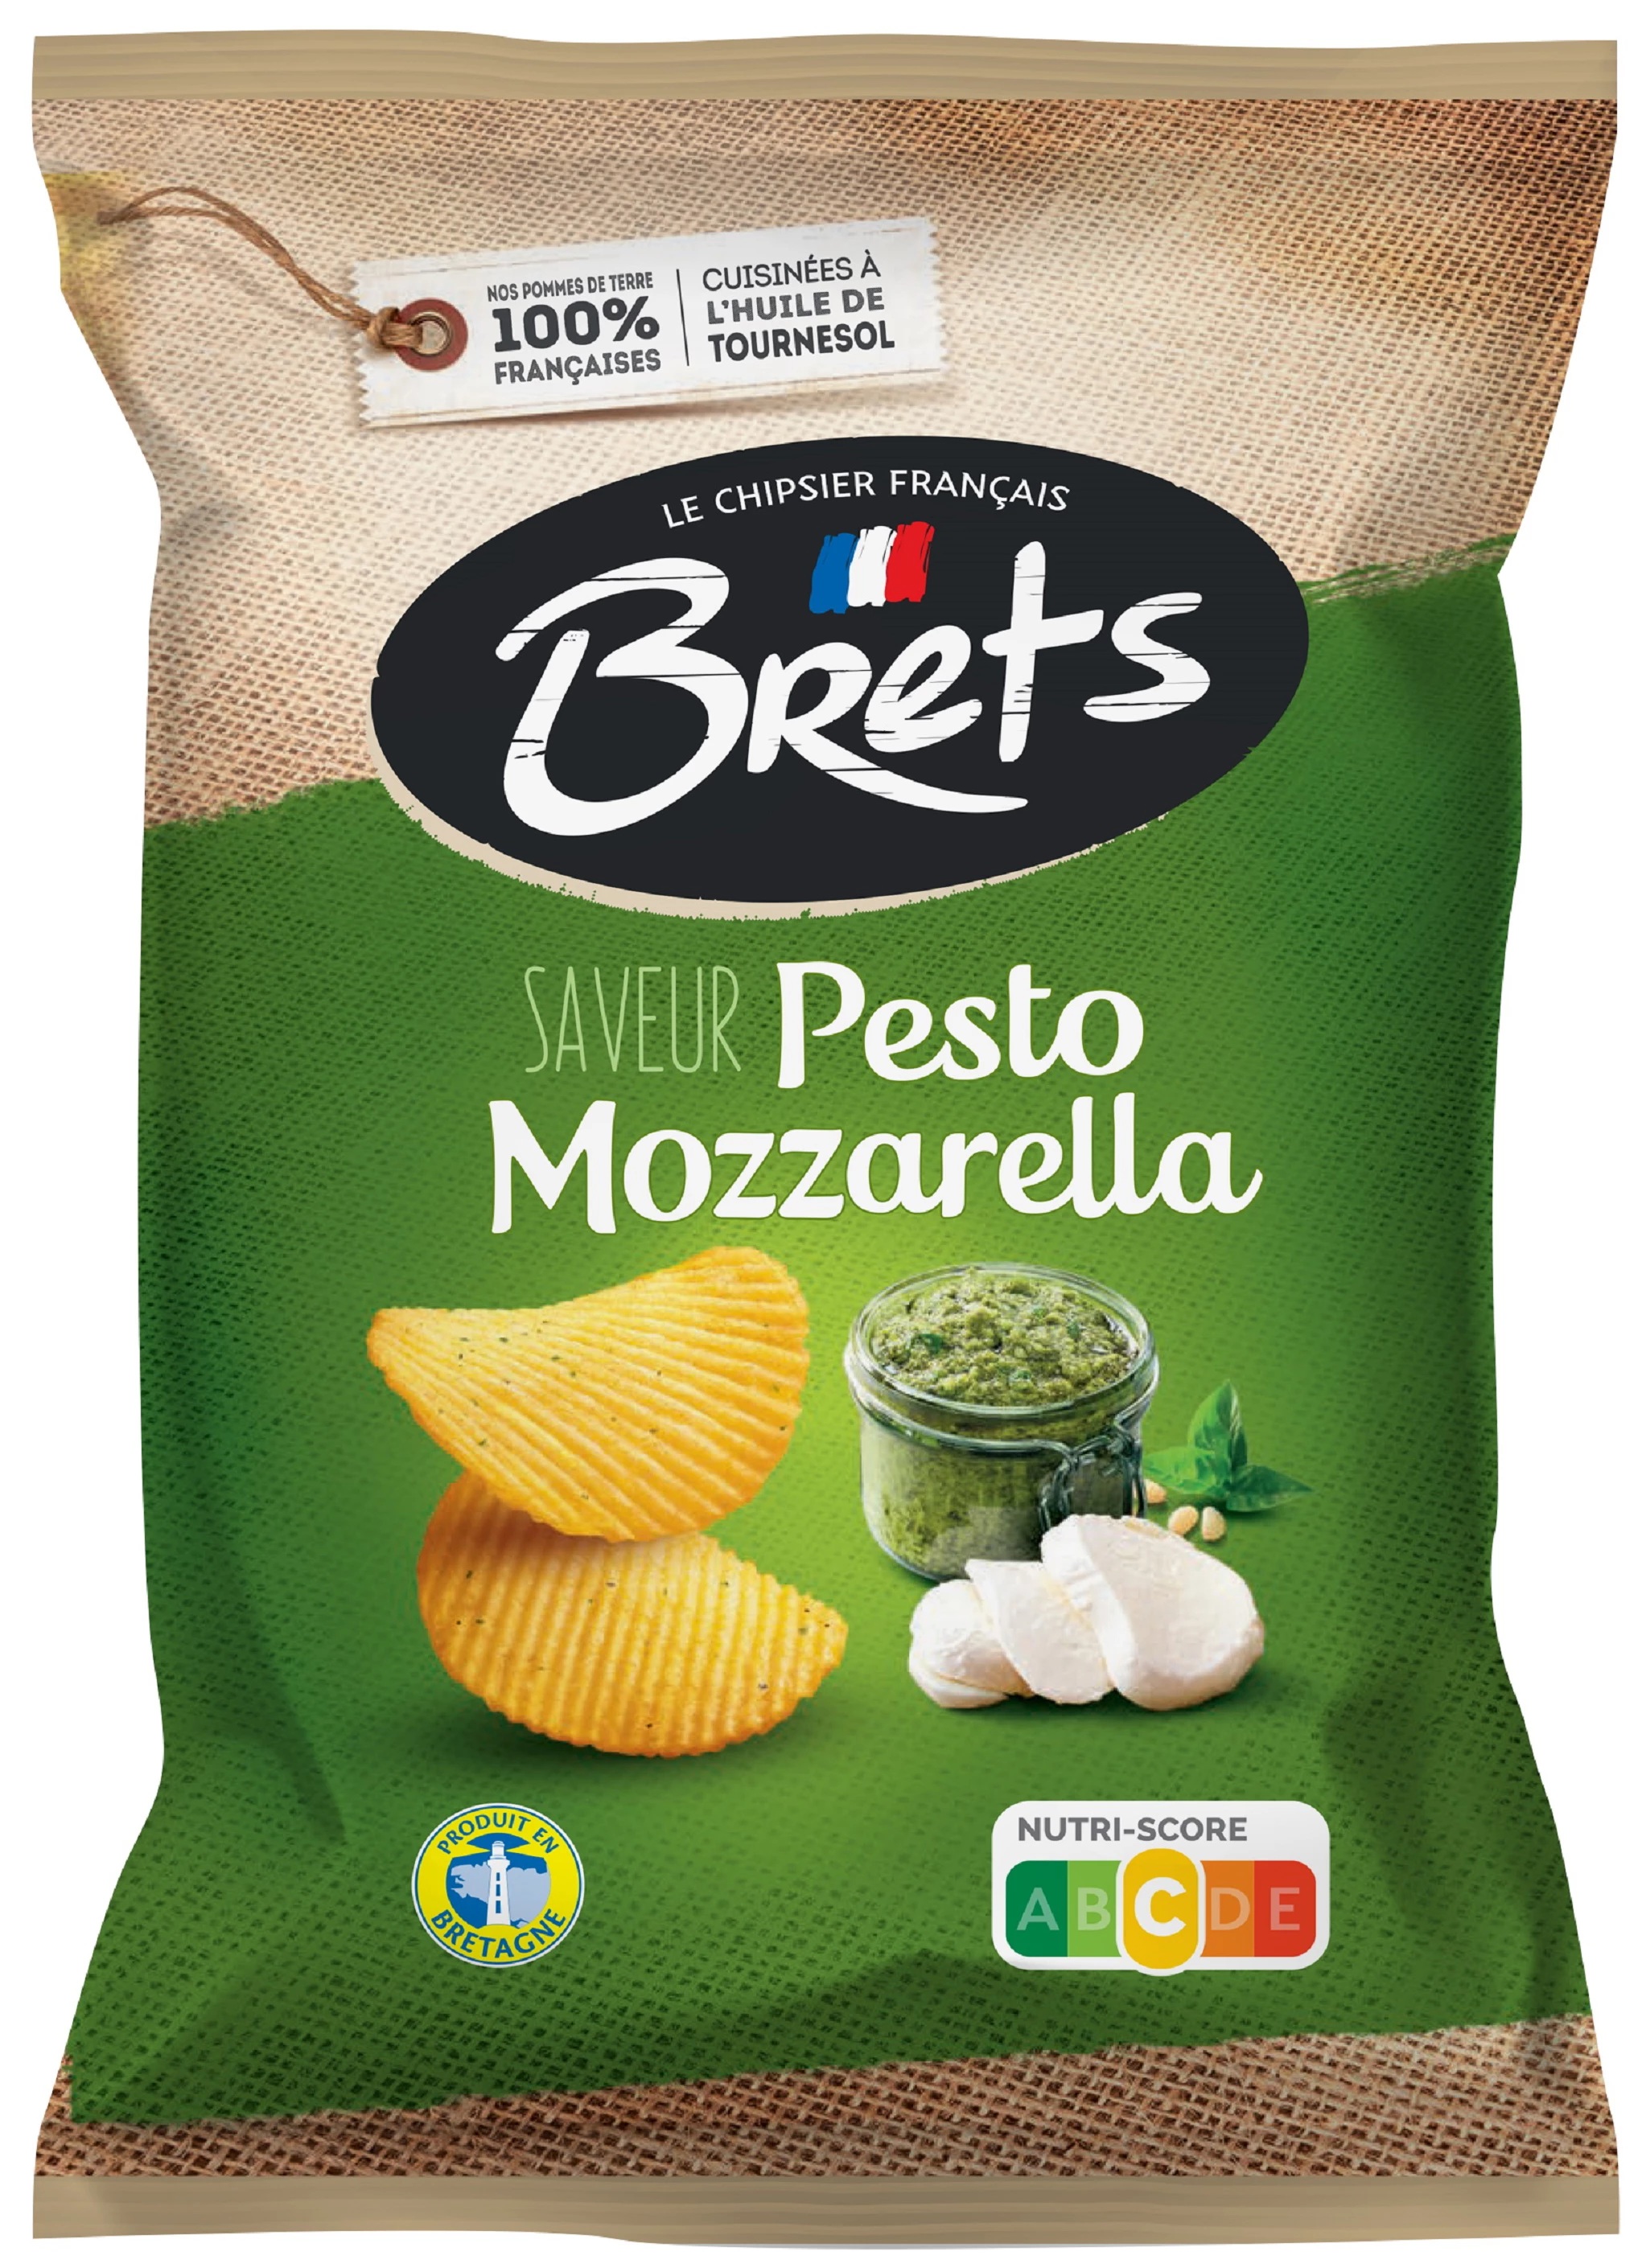 Bánh Pesto Mozza Chips Bret's, 125g - BRET'S